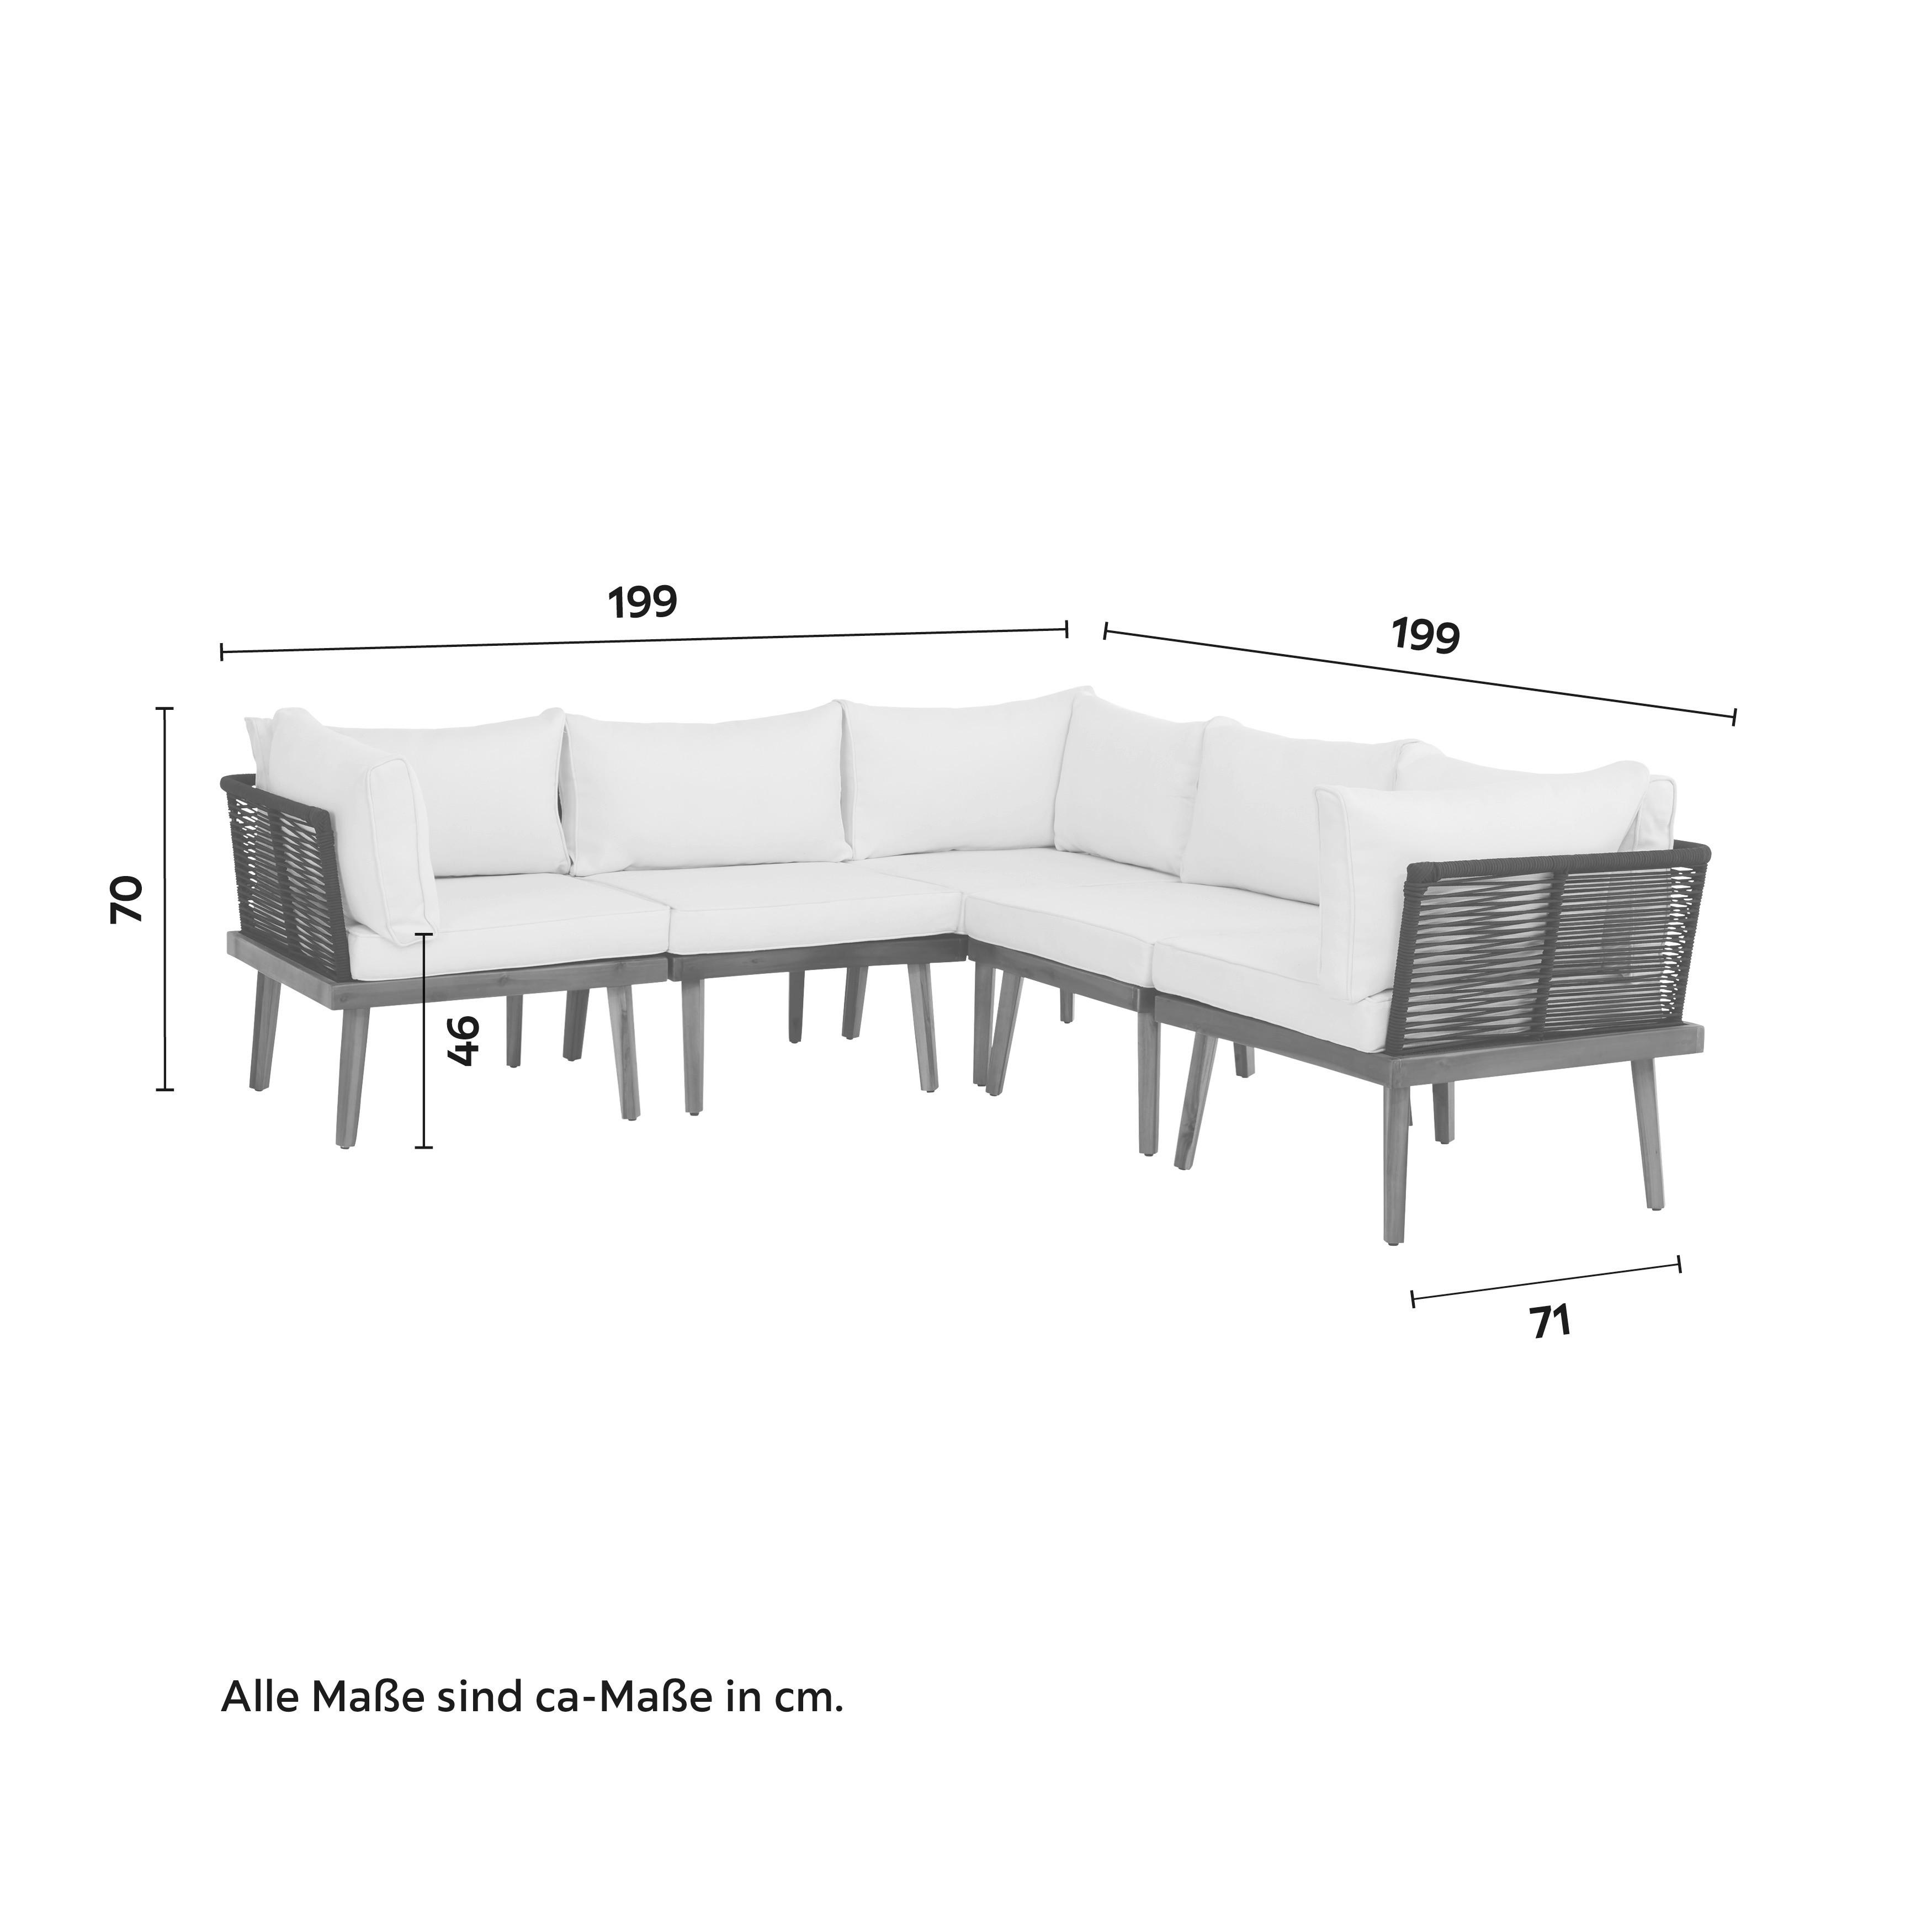 Lounge Garnitura Linnea, Bela, Akacija - črna/naravne barve, Moderno, kovina/umetna masa (199/199cm)